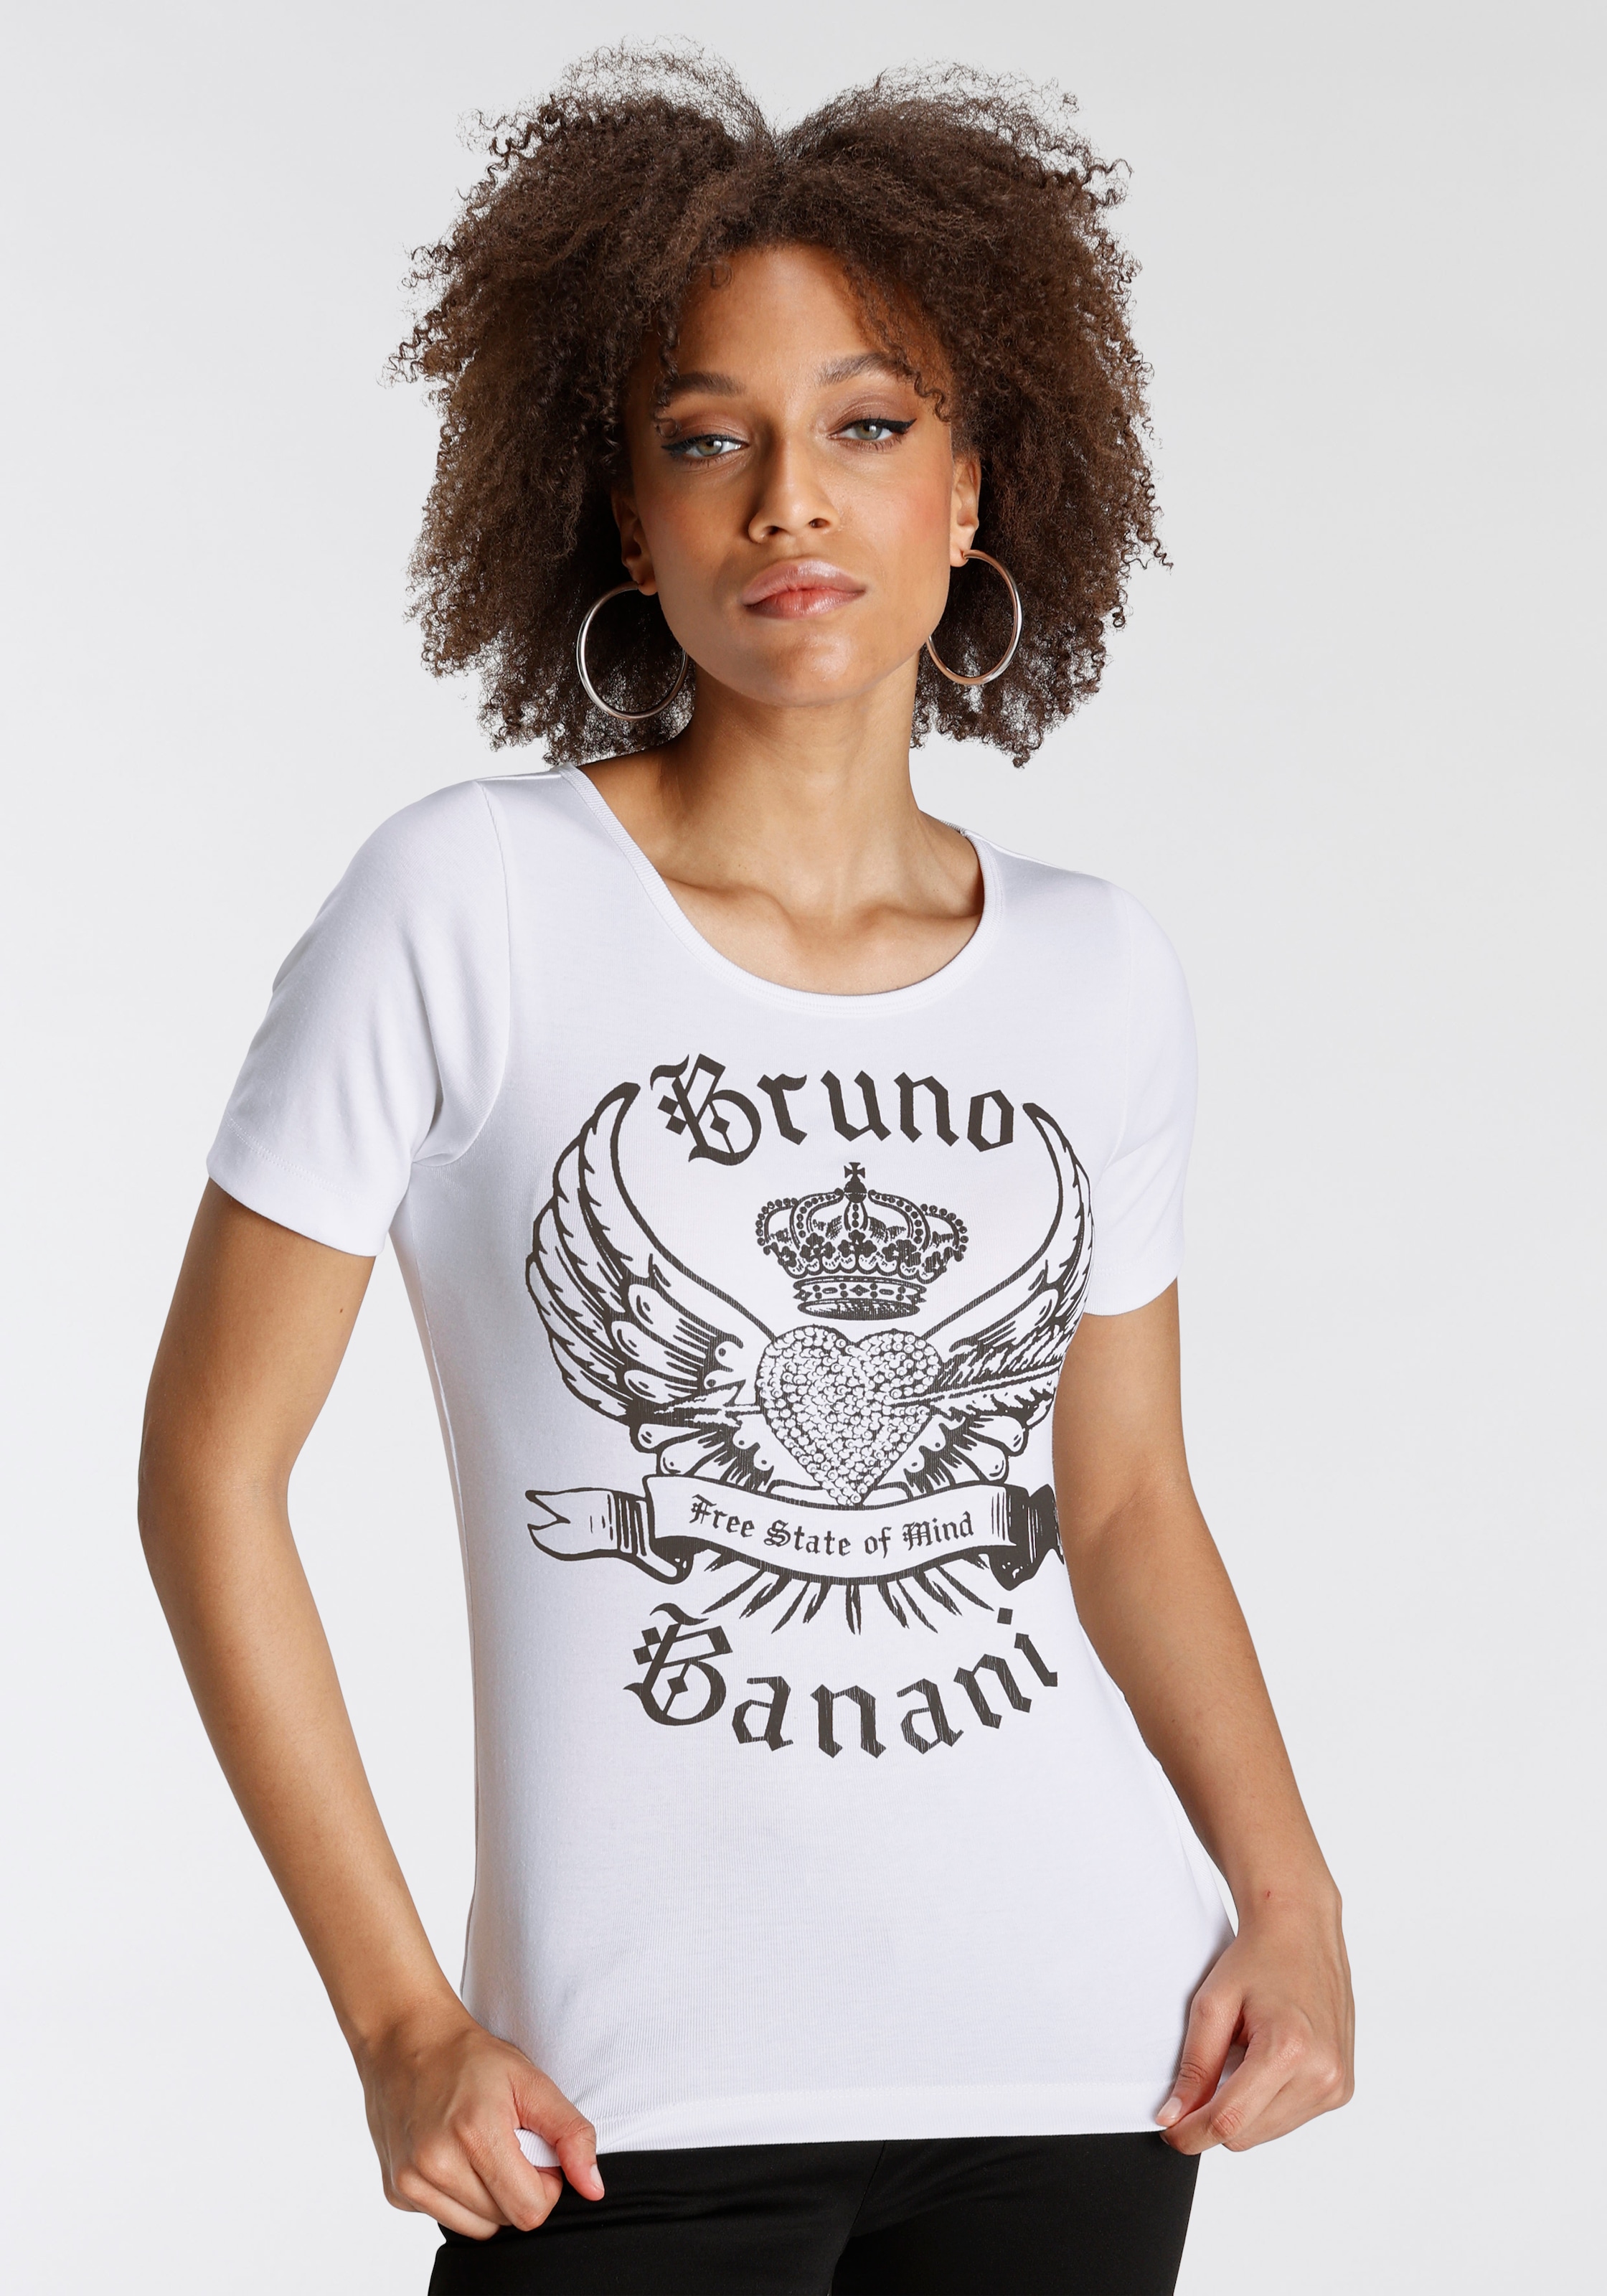 NEUE Bruno online Banani KOLLEKTION OTTO bei Logo-Print T-Shirt,